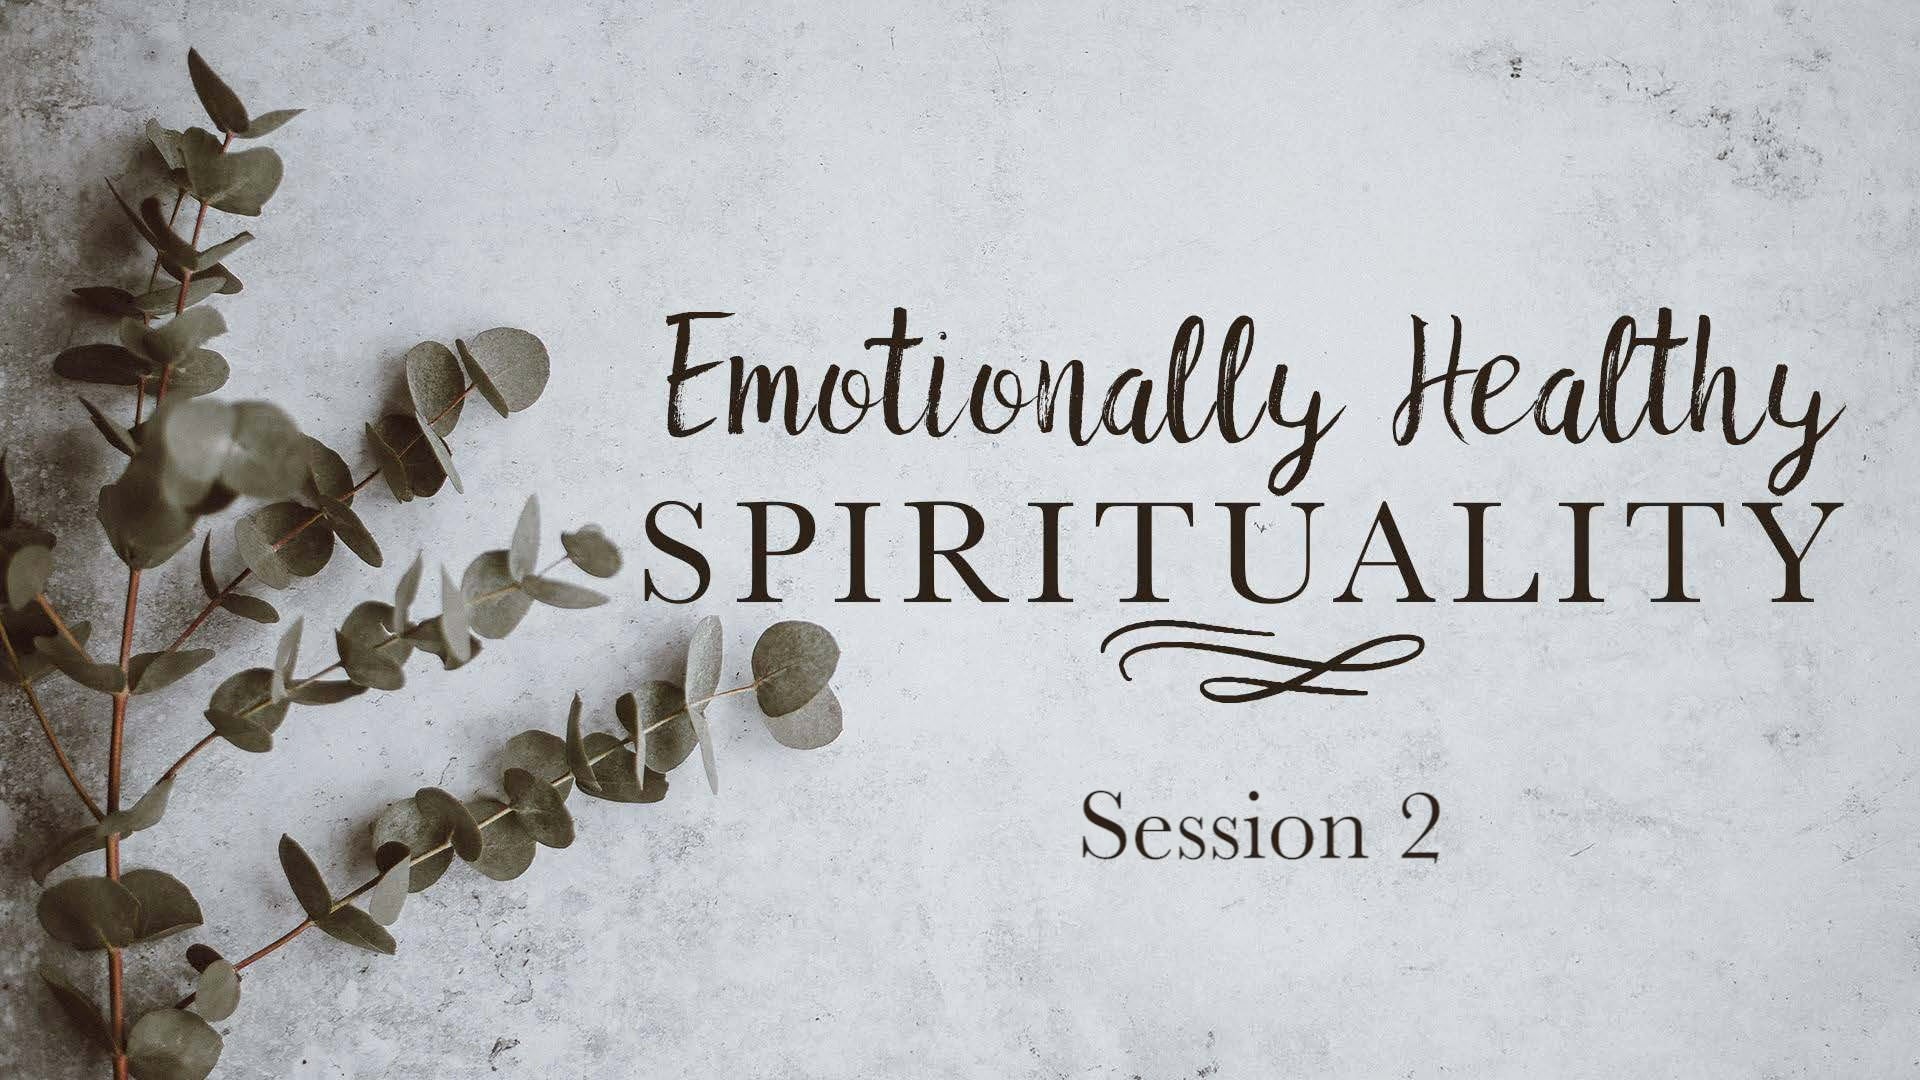 Symptoms of Emotionally Unhealthy Spirituality